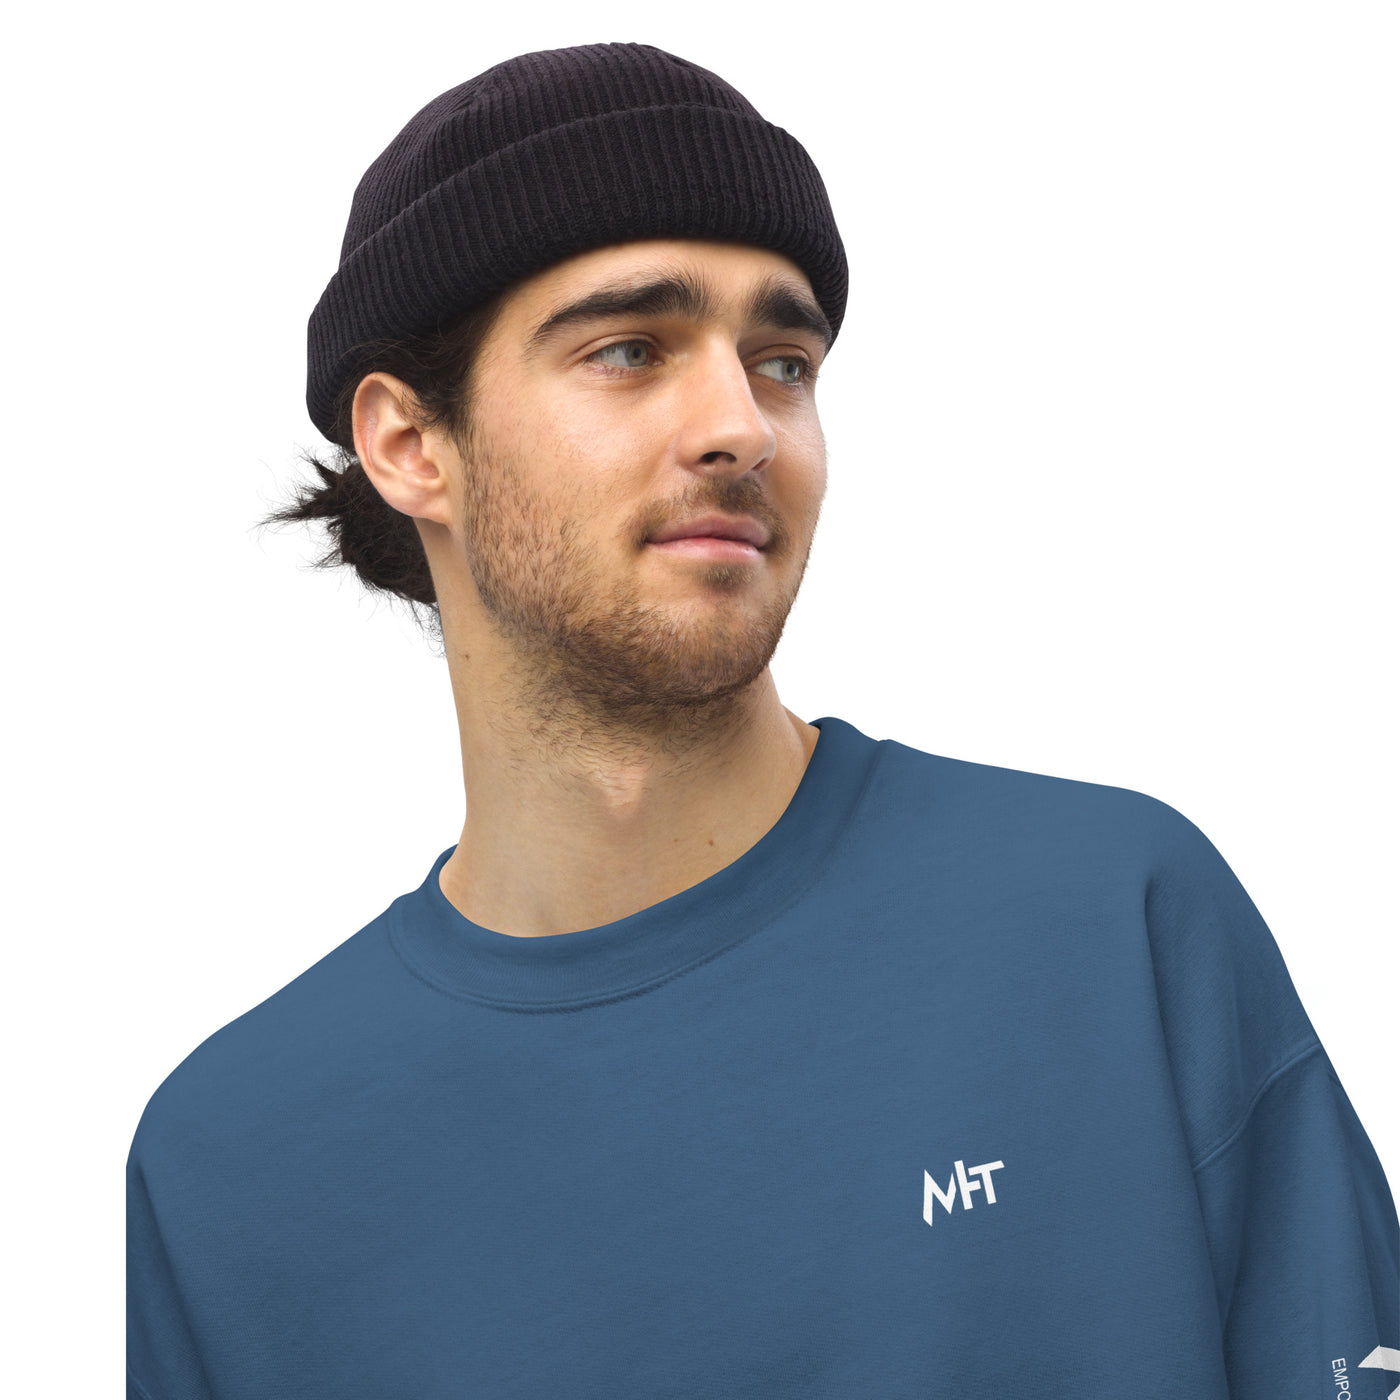 If coding headphones true focus 100 conversation null - Unisex Sweatshirt (back print)